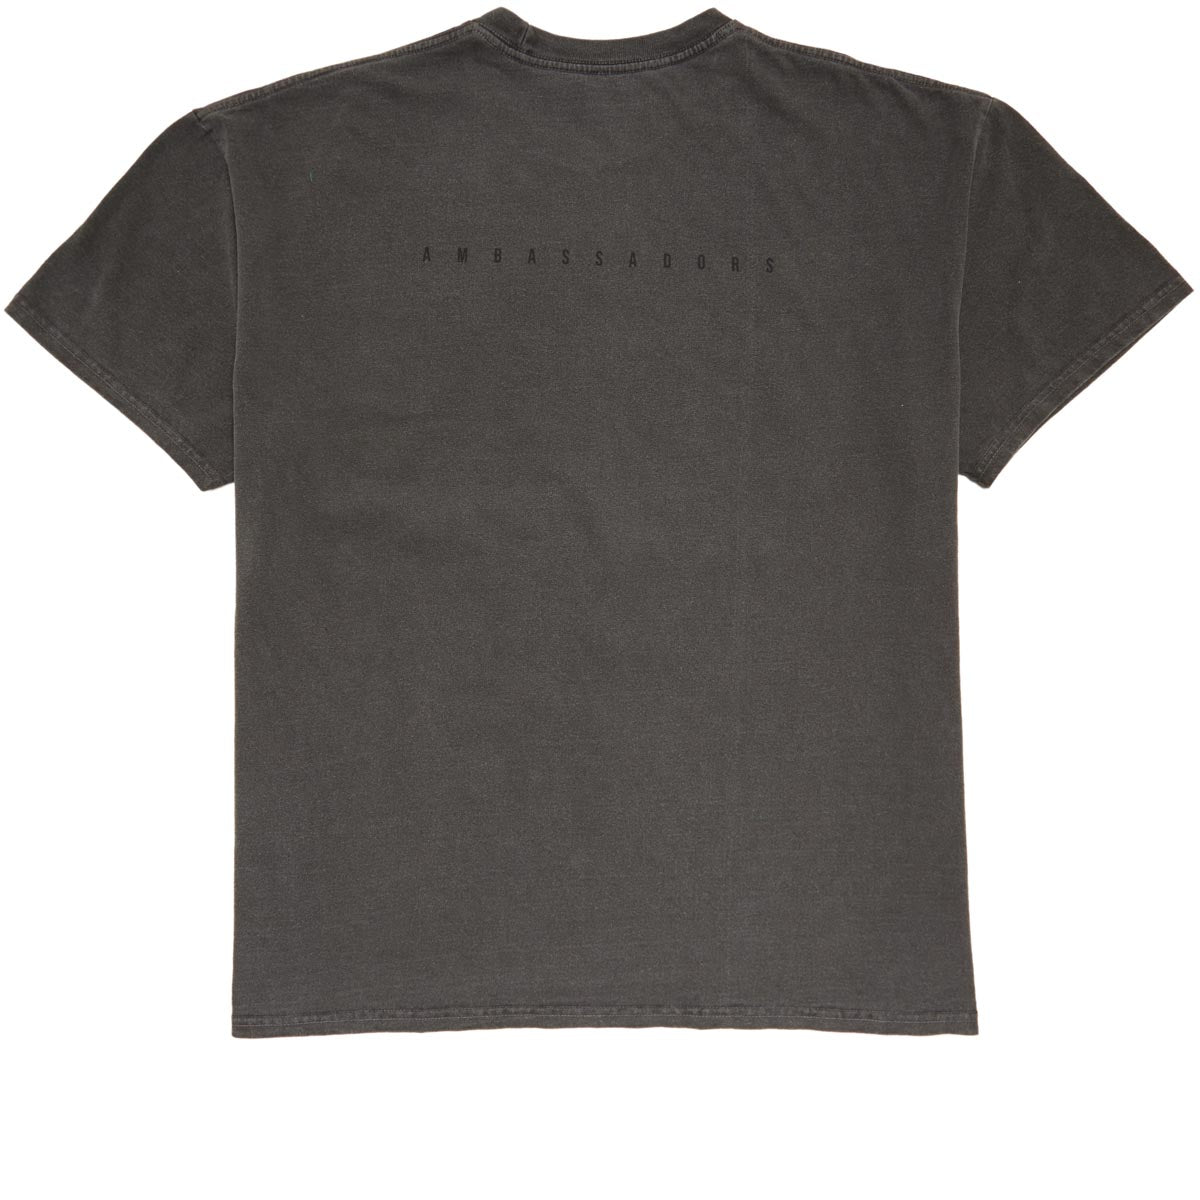 AVVA Reef Rider T-Shirt - Charcoal Grey image 2